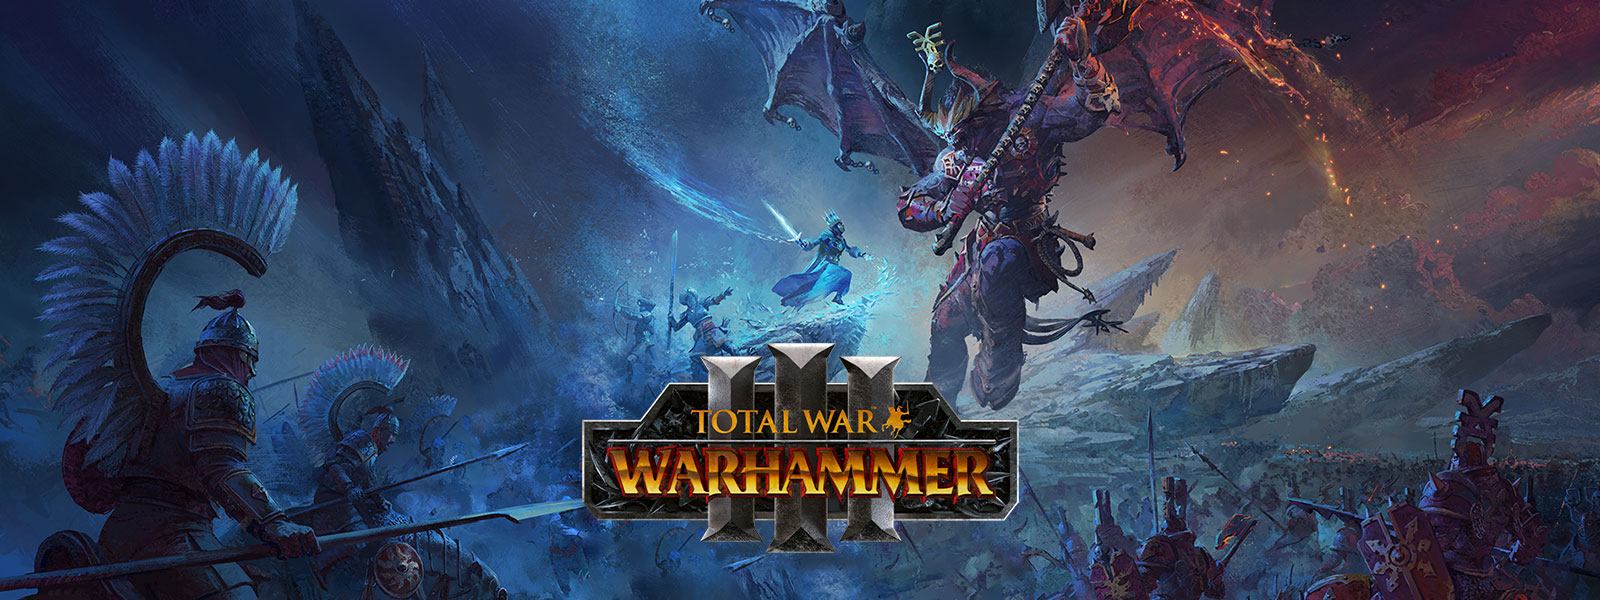 Total War Warhammer 3: En istrollmann møter en gigantisk dragedemon over en slagmark.